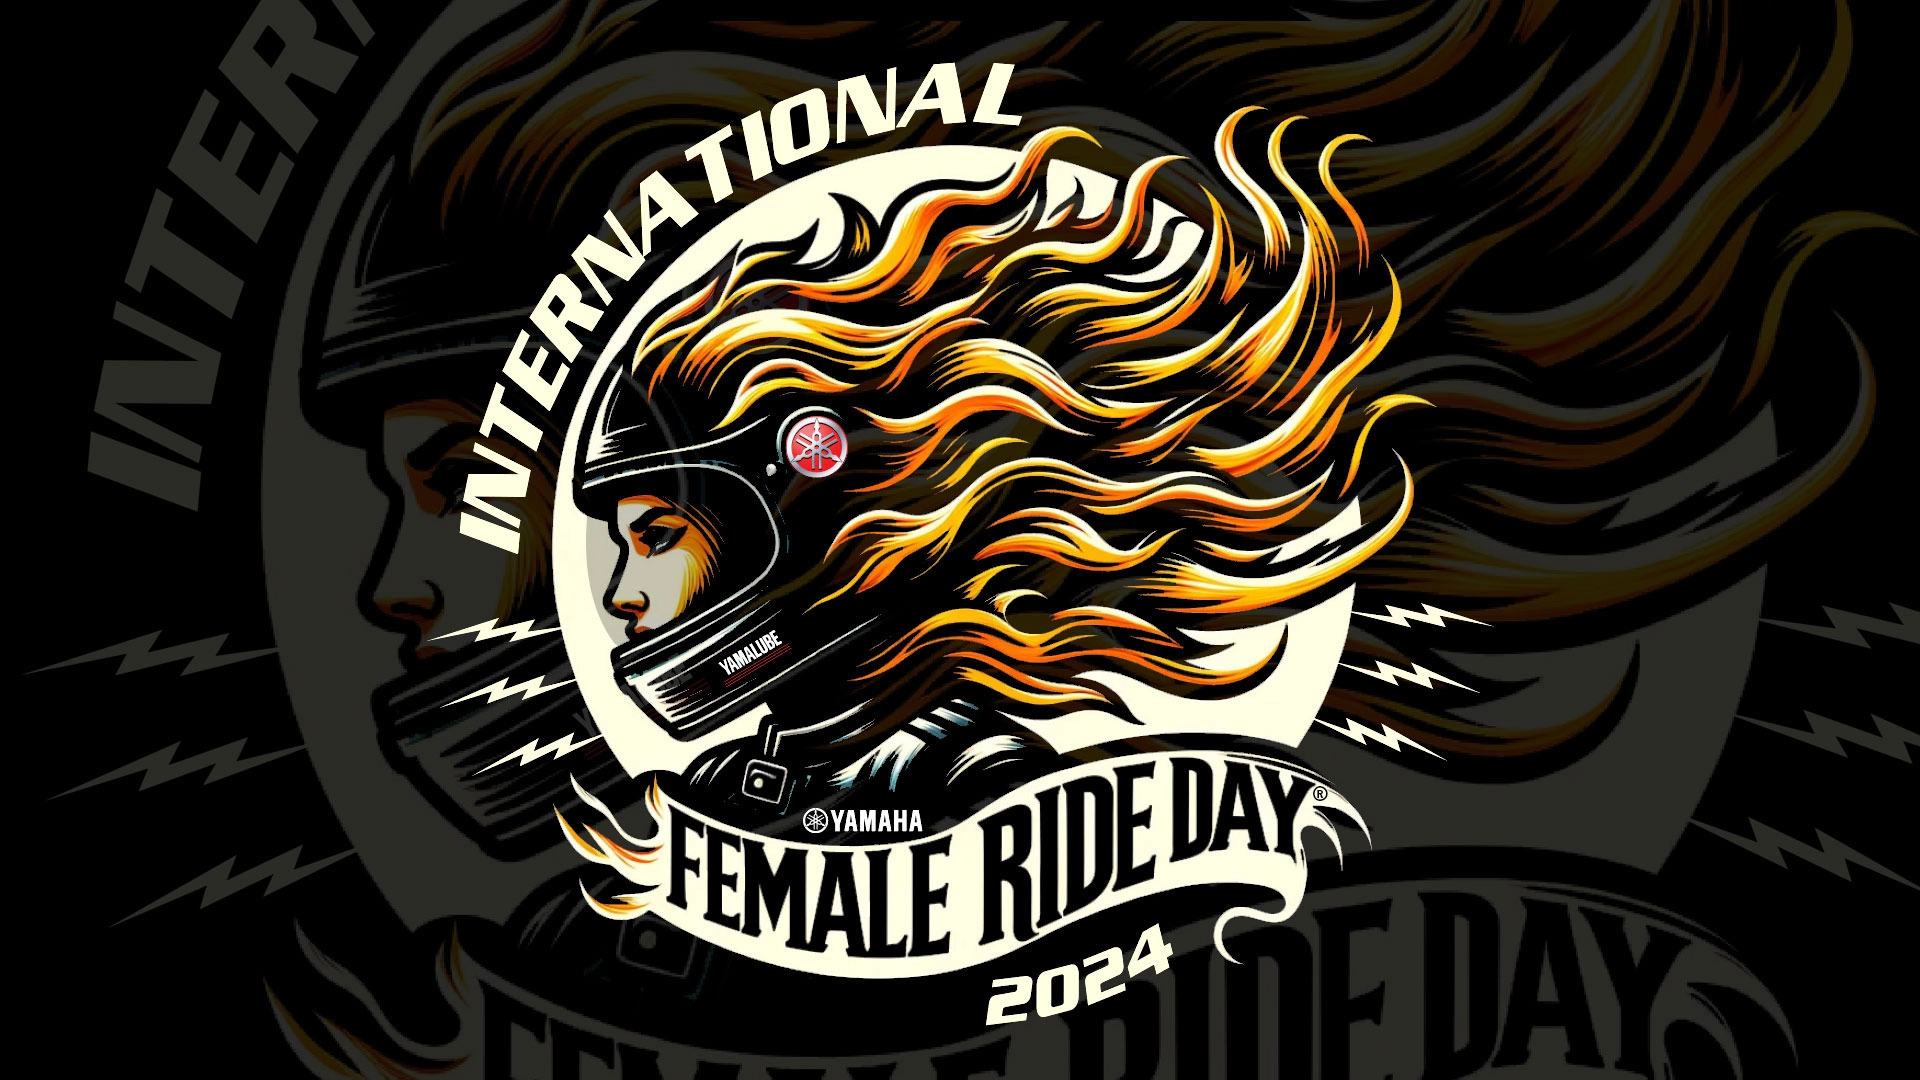 INTERNATIONAL FEMALE RIDE DAY® EVENT - A Yamaha Event